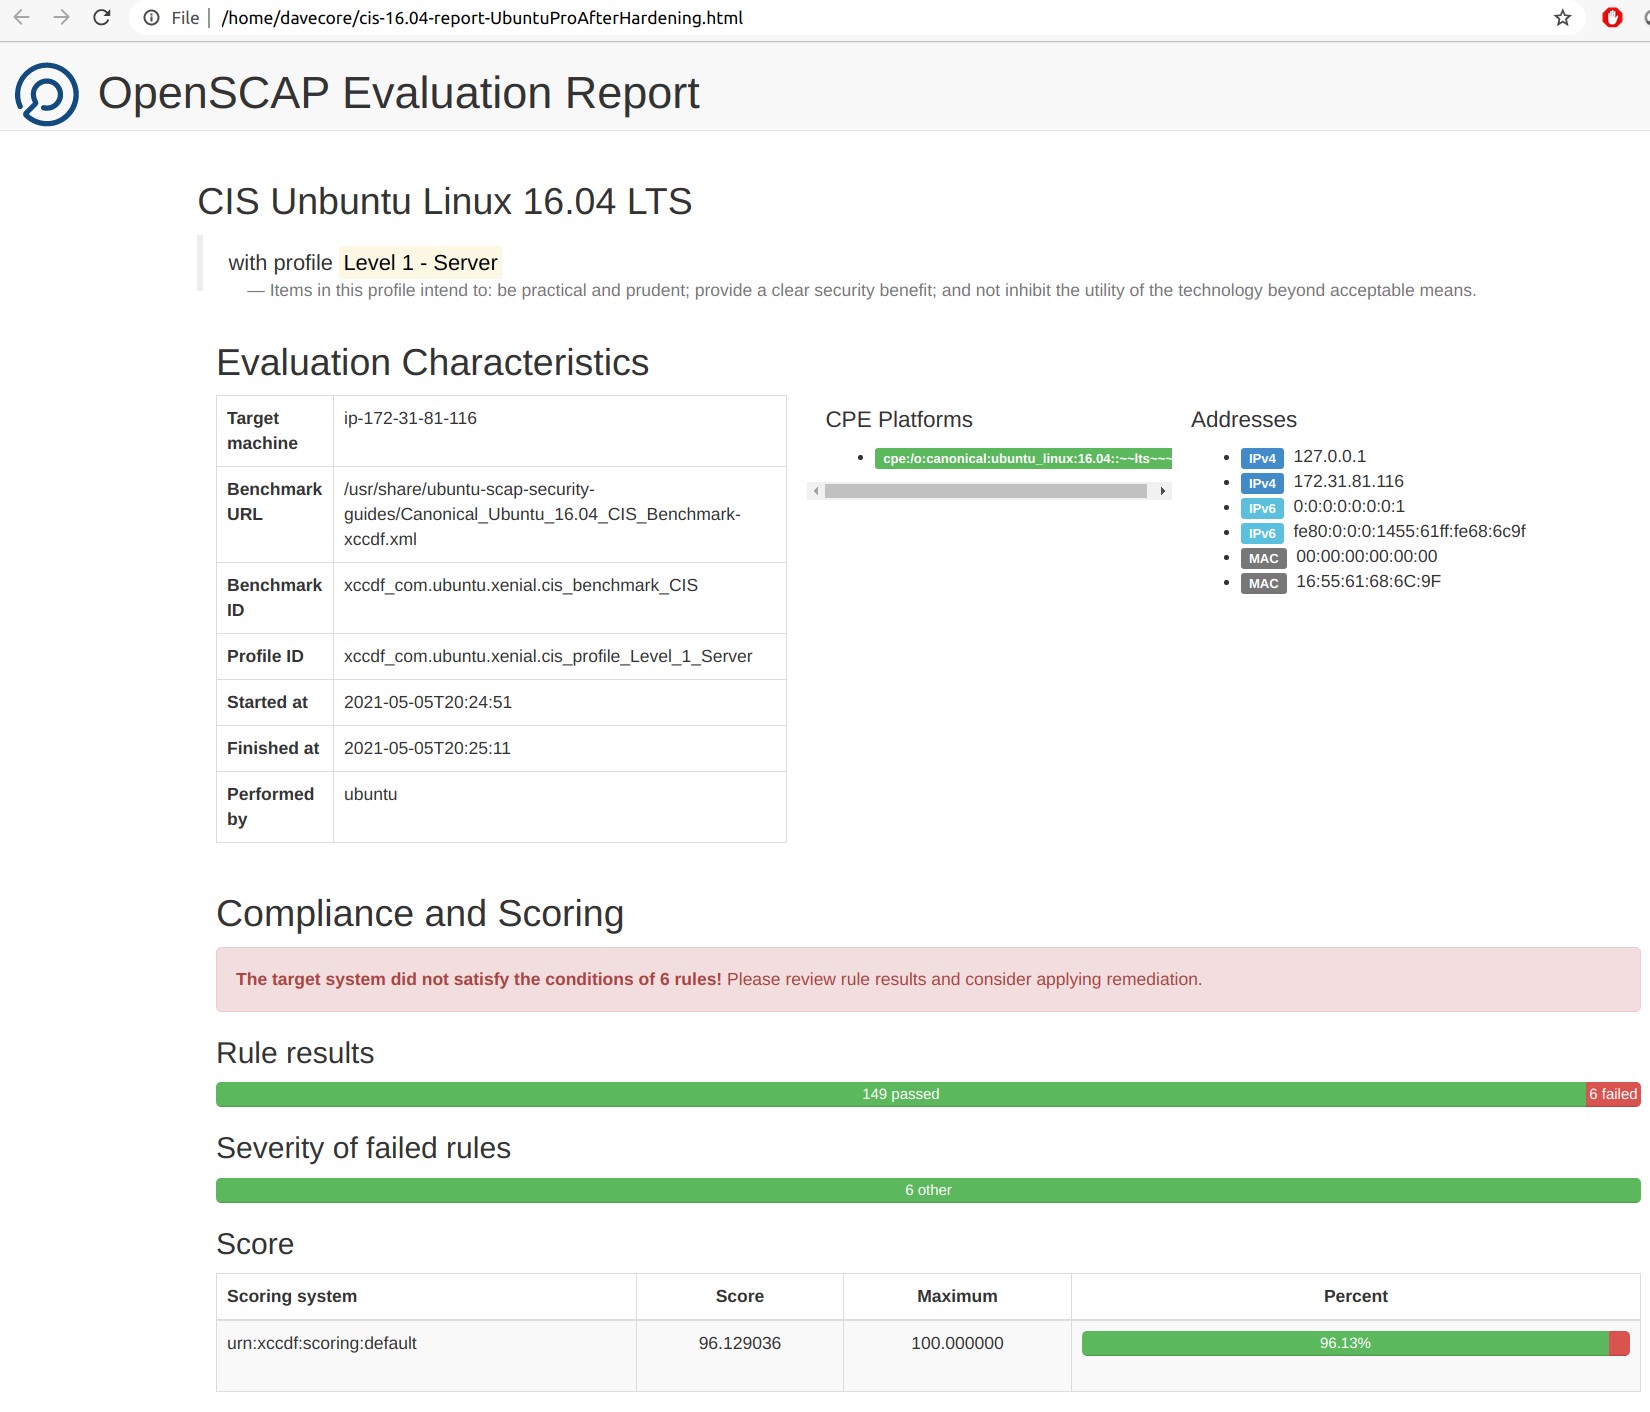 cis-16.04-report-UbuntuProAfterHardening HTML report